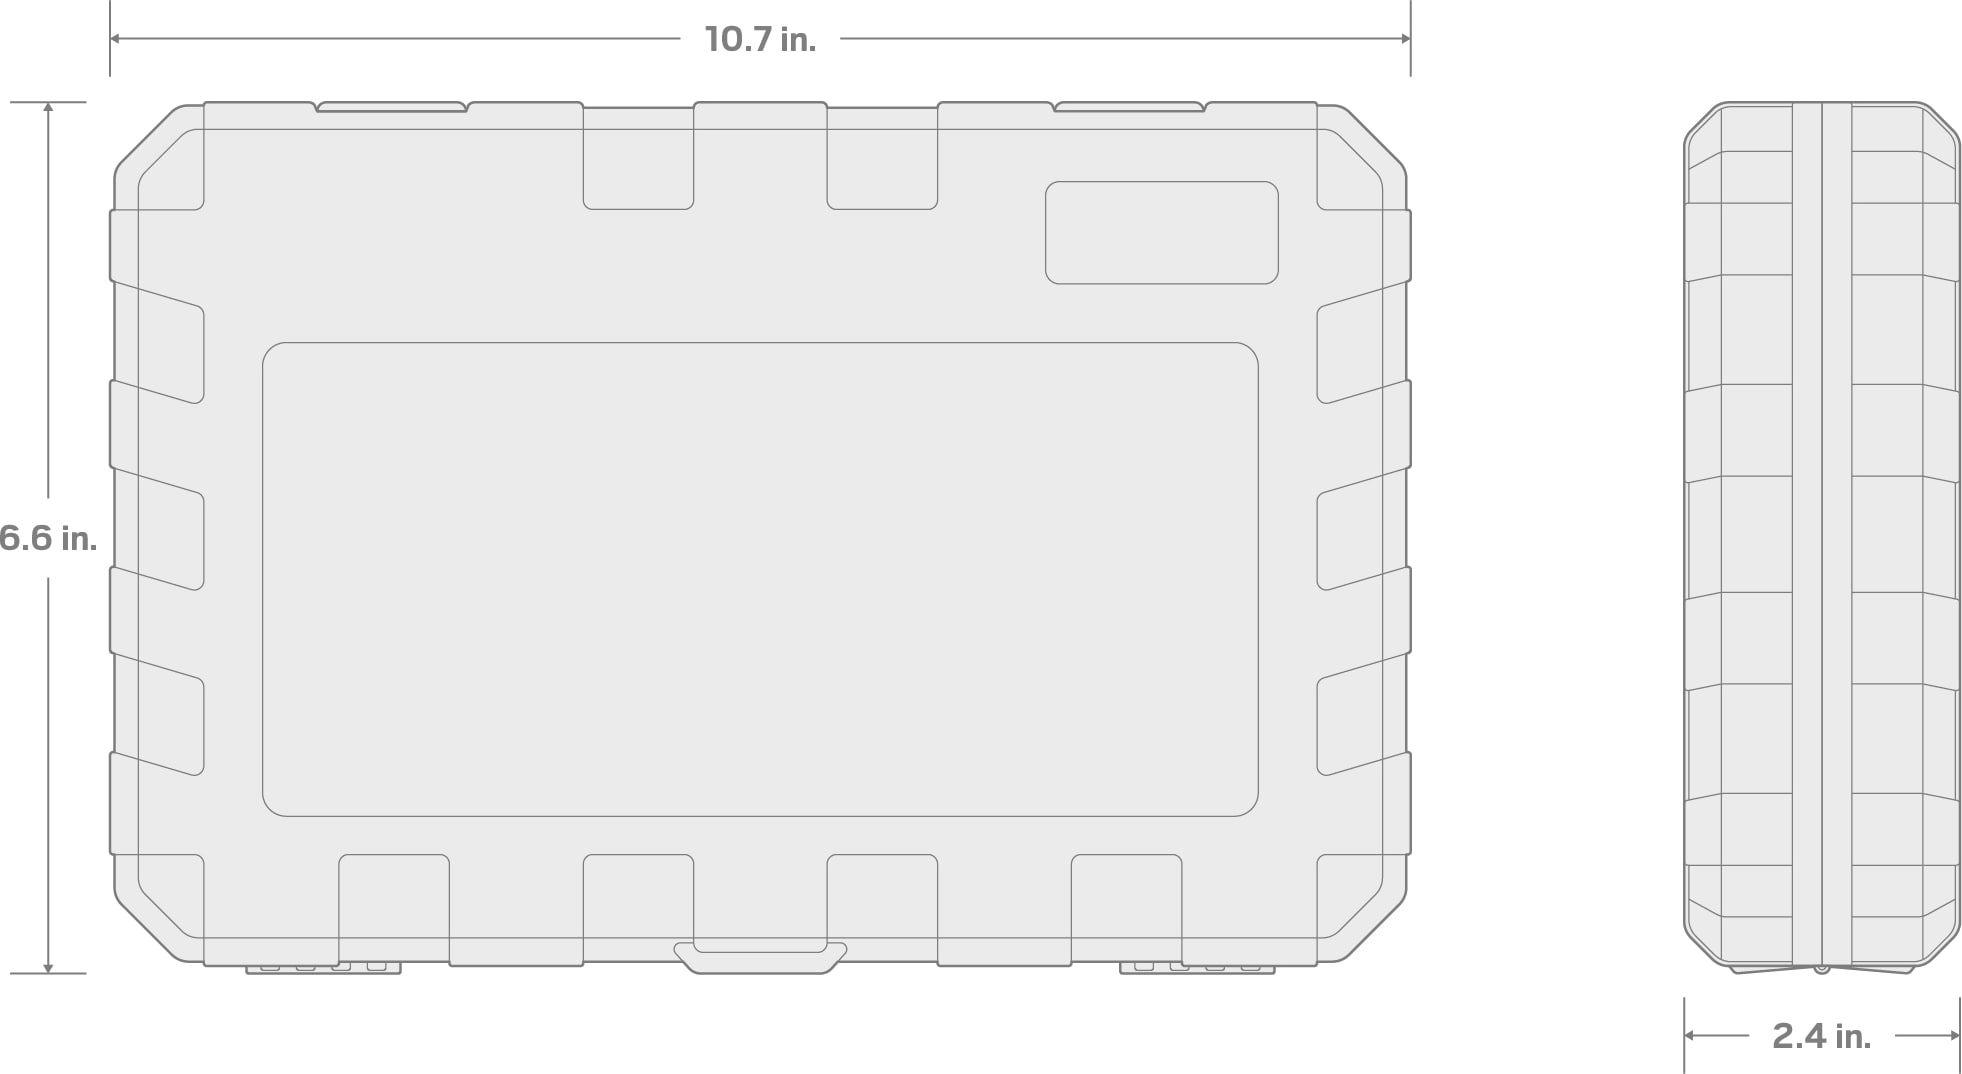 Specs for 3/8 Inch Drive Long Hex Bit Socket Set, 19-Piece (1/8-3/8 in., 3-10 mm)